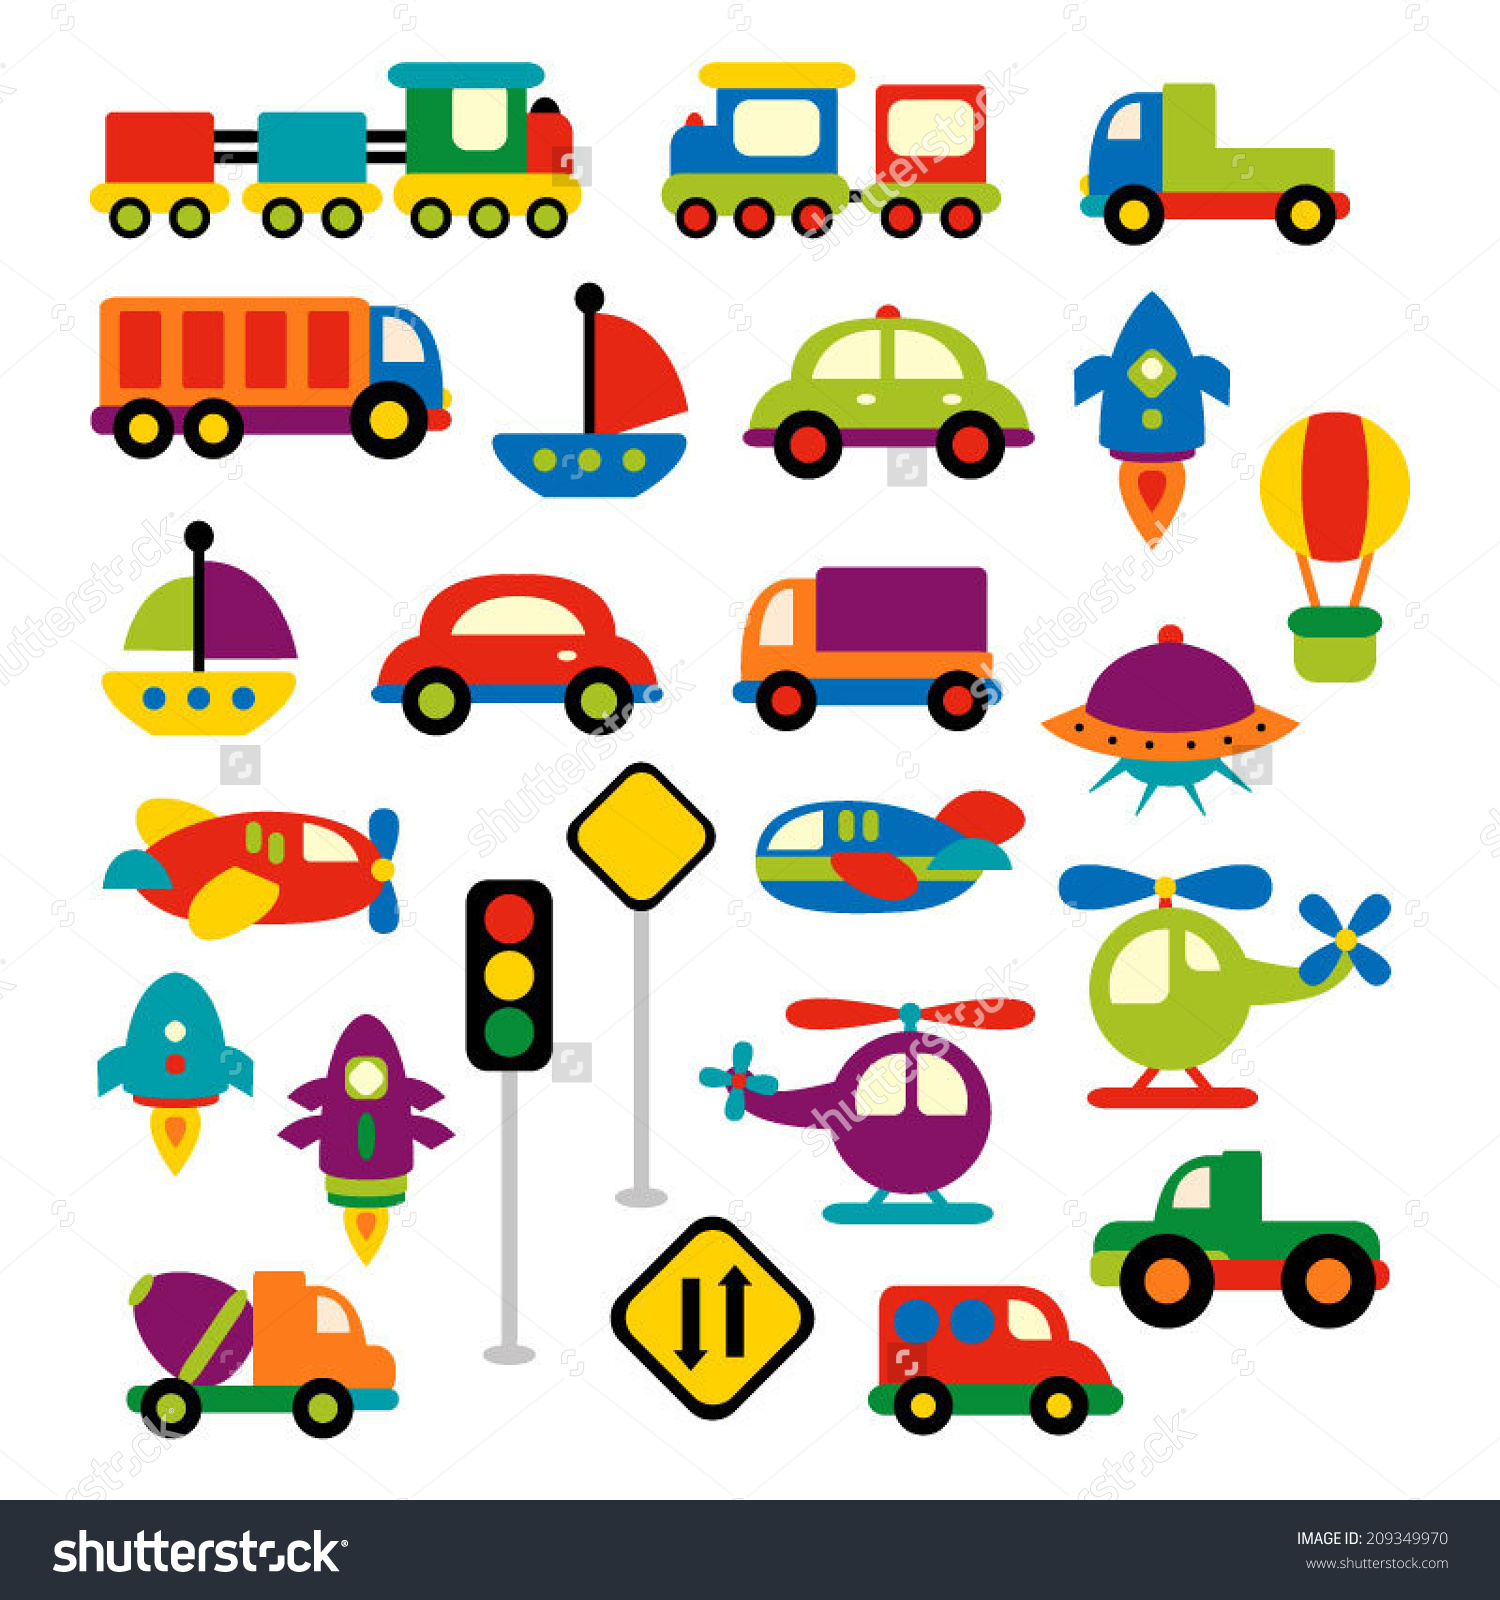 Transportation vector clip art in bright colors. Trains, trucks, cars, boat,